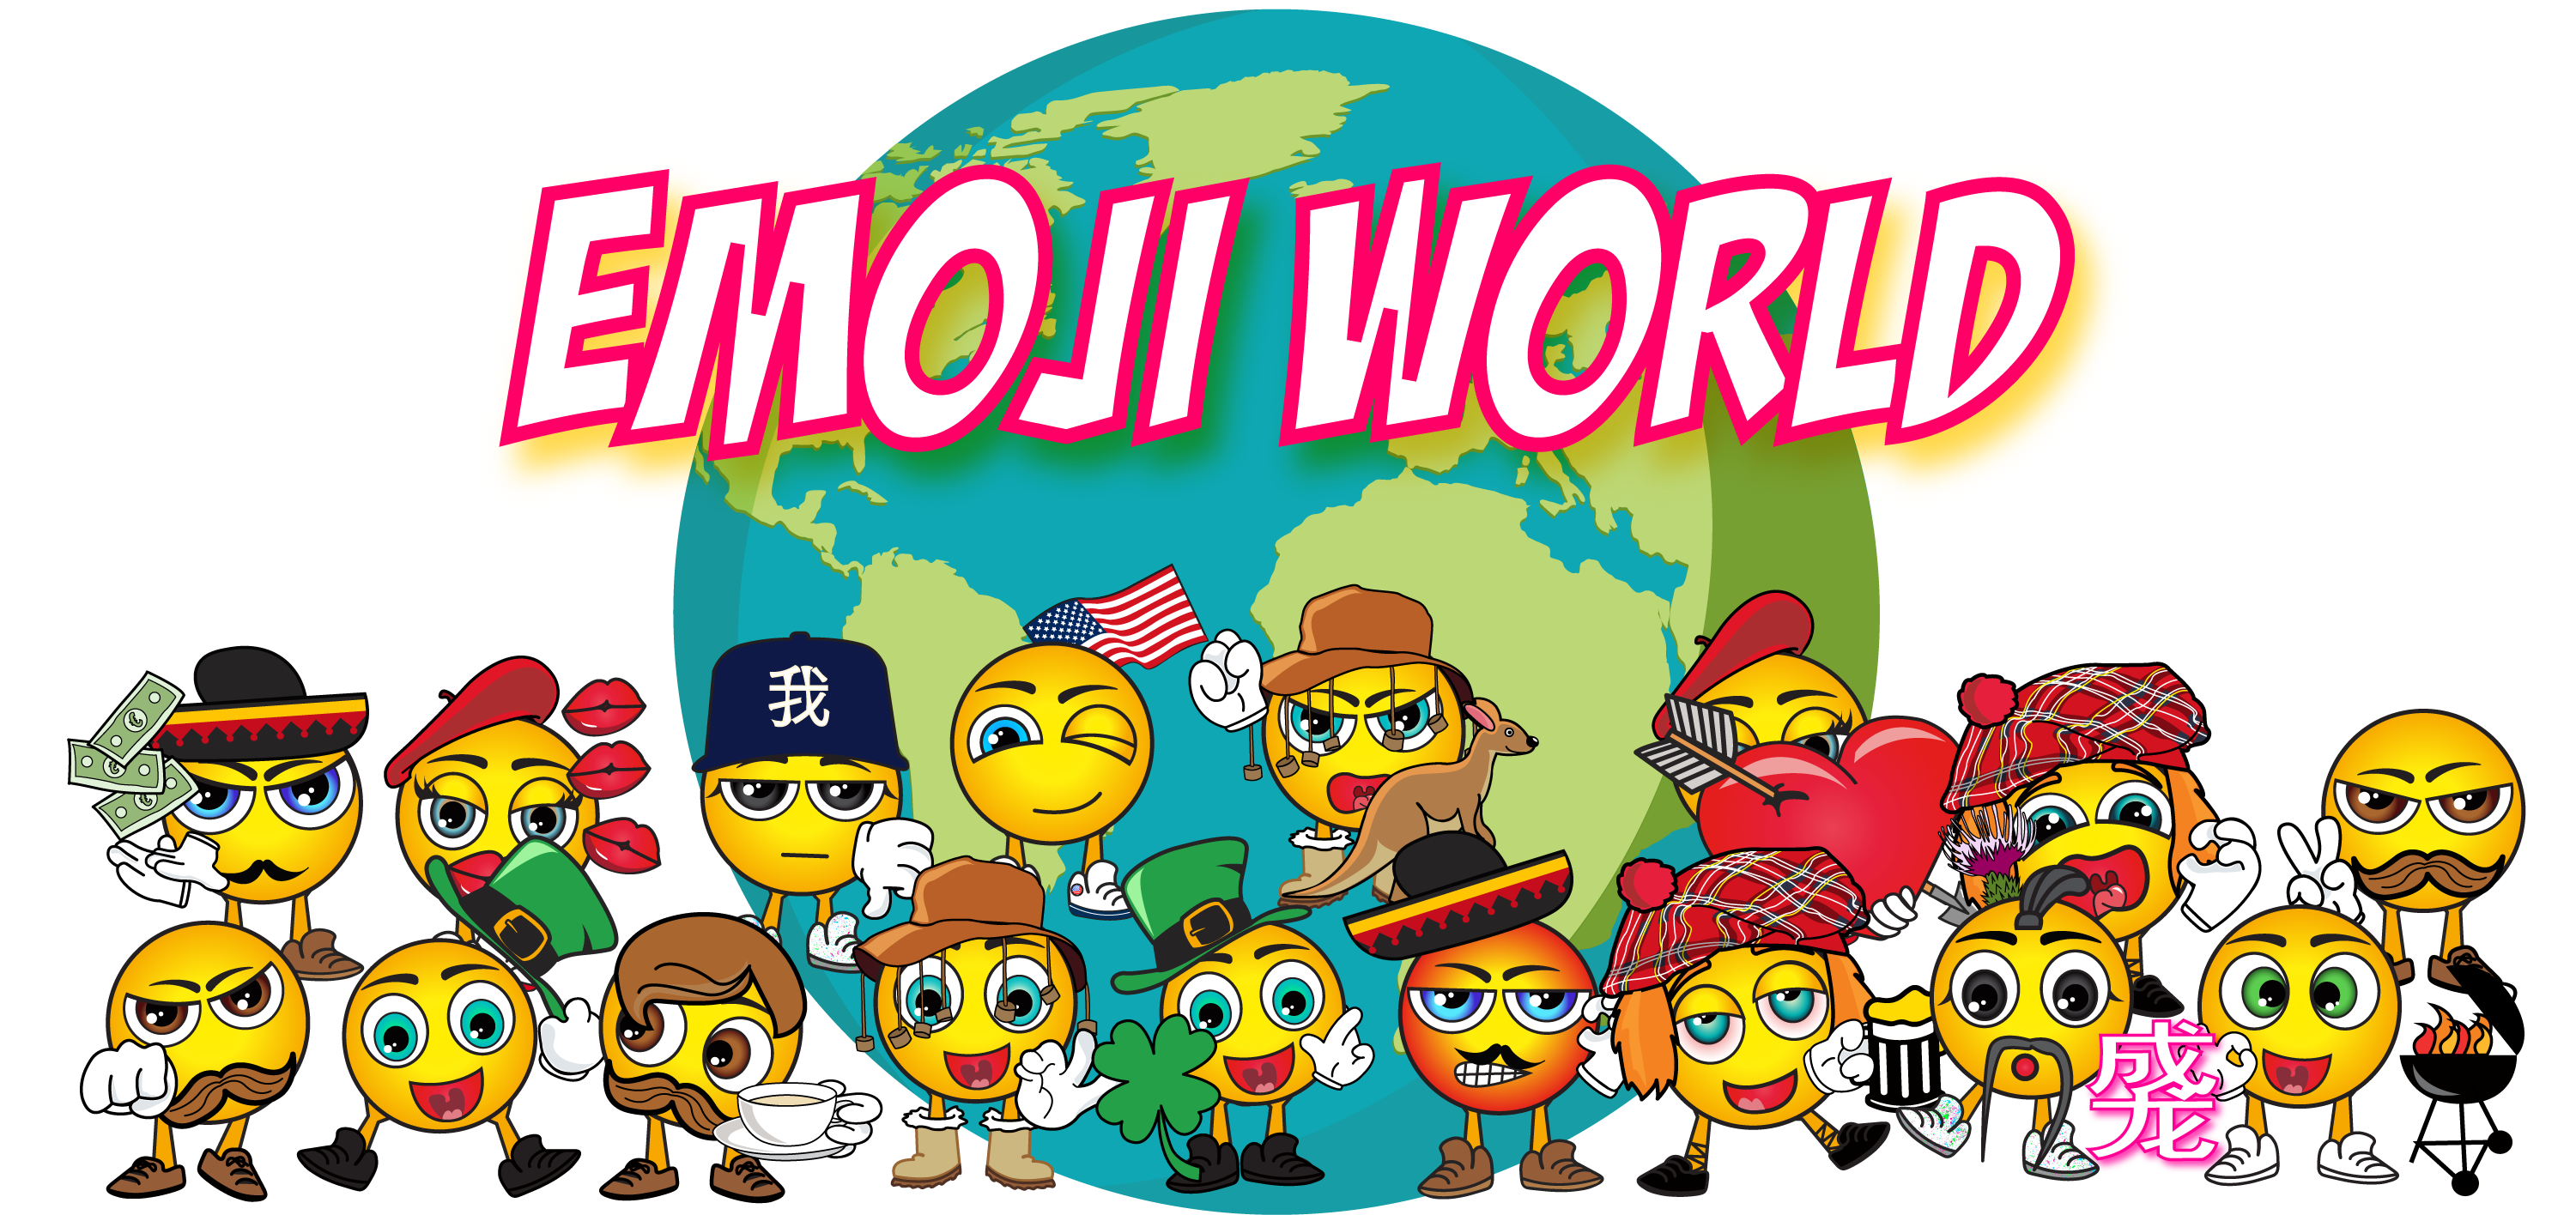 The Emoji World